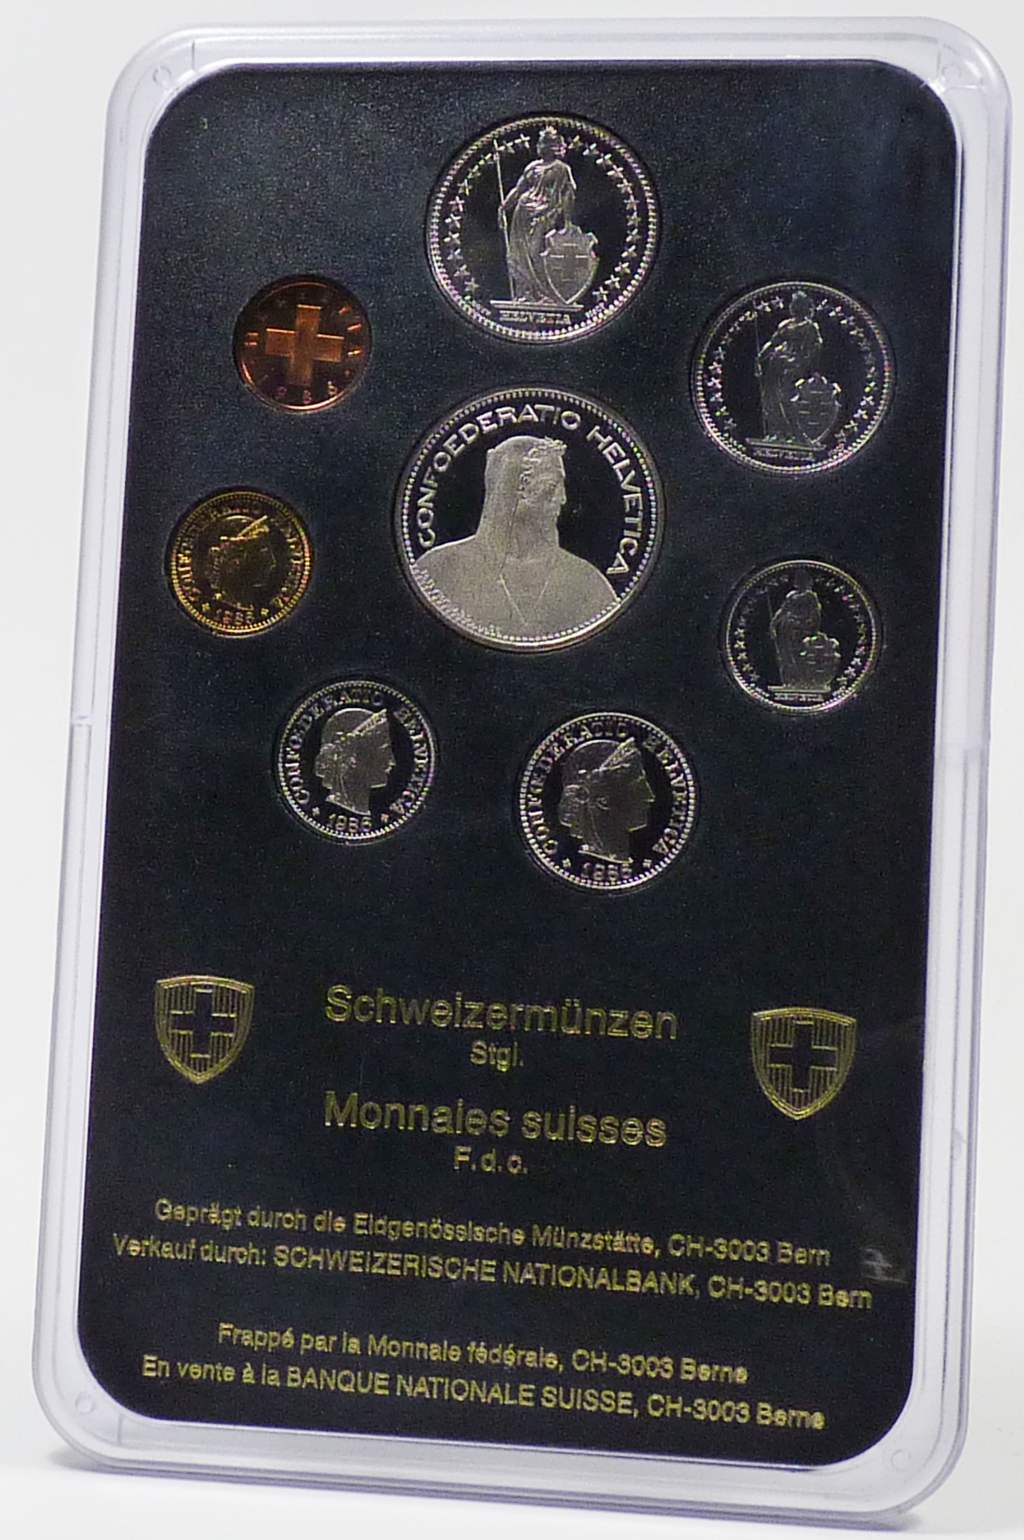 Schweiz Kursmünzensatz 1985 stempelglanz OVP